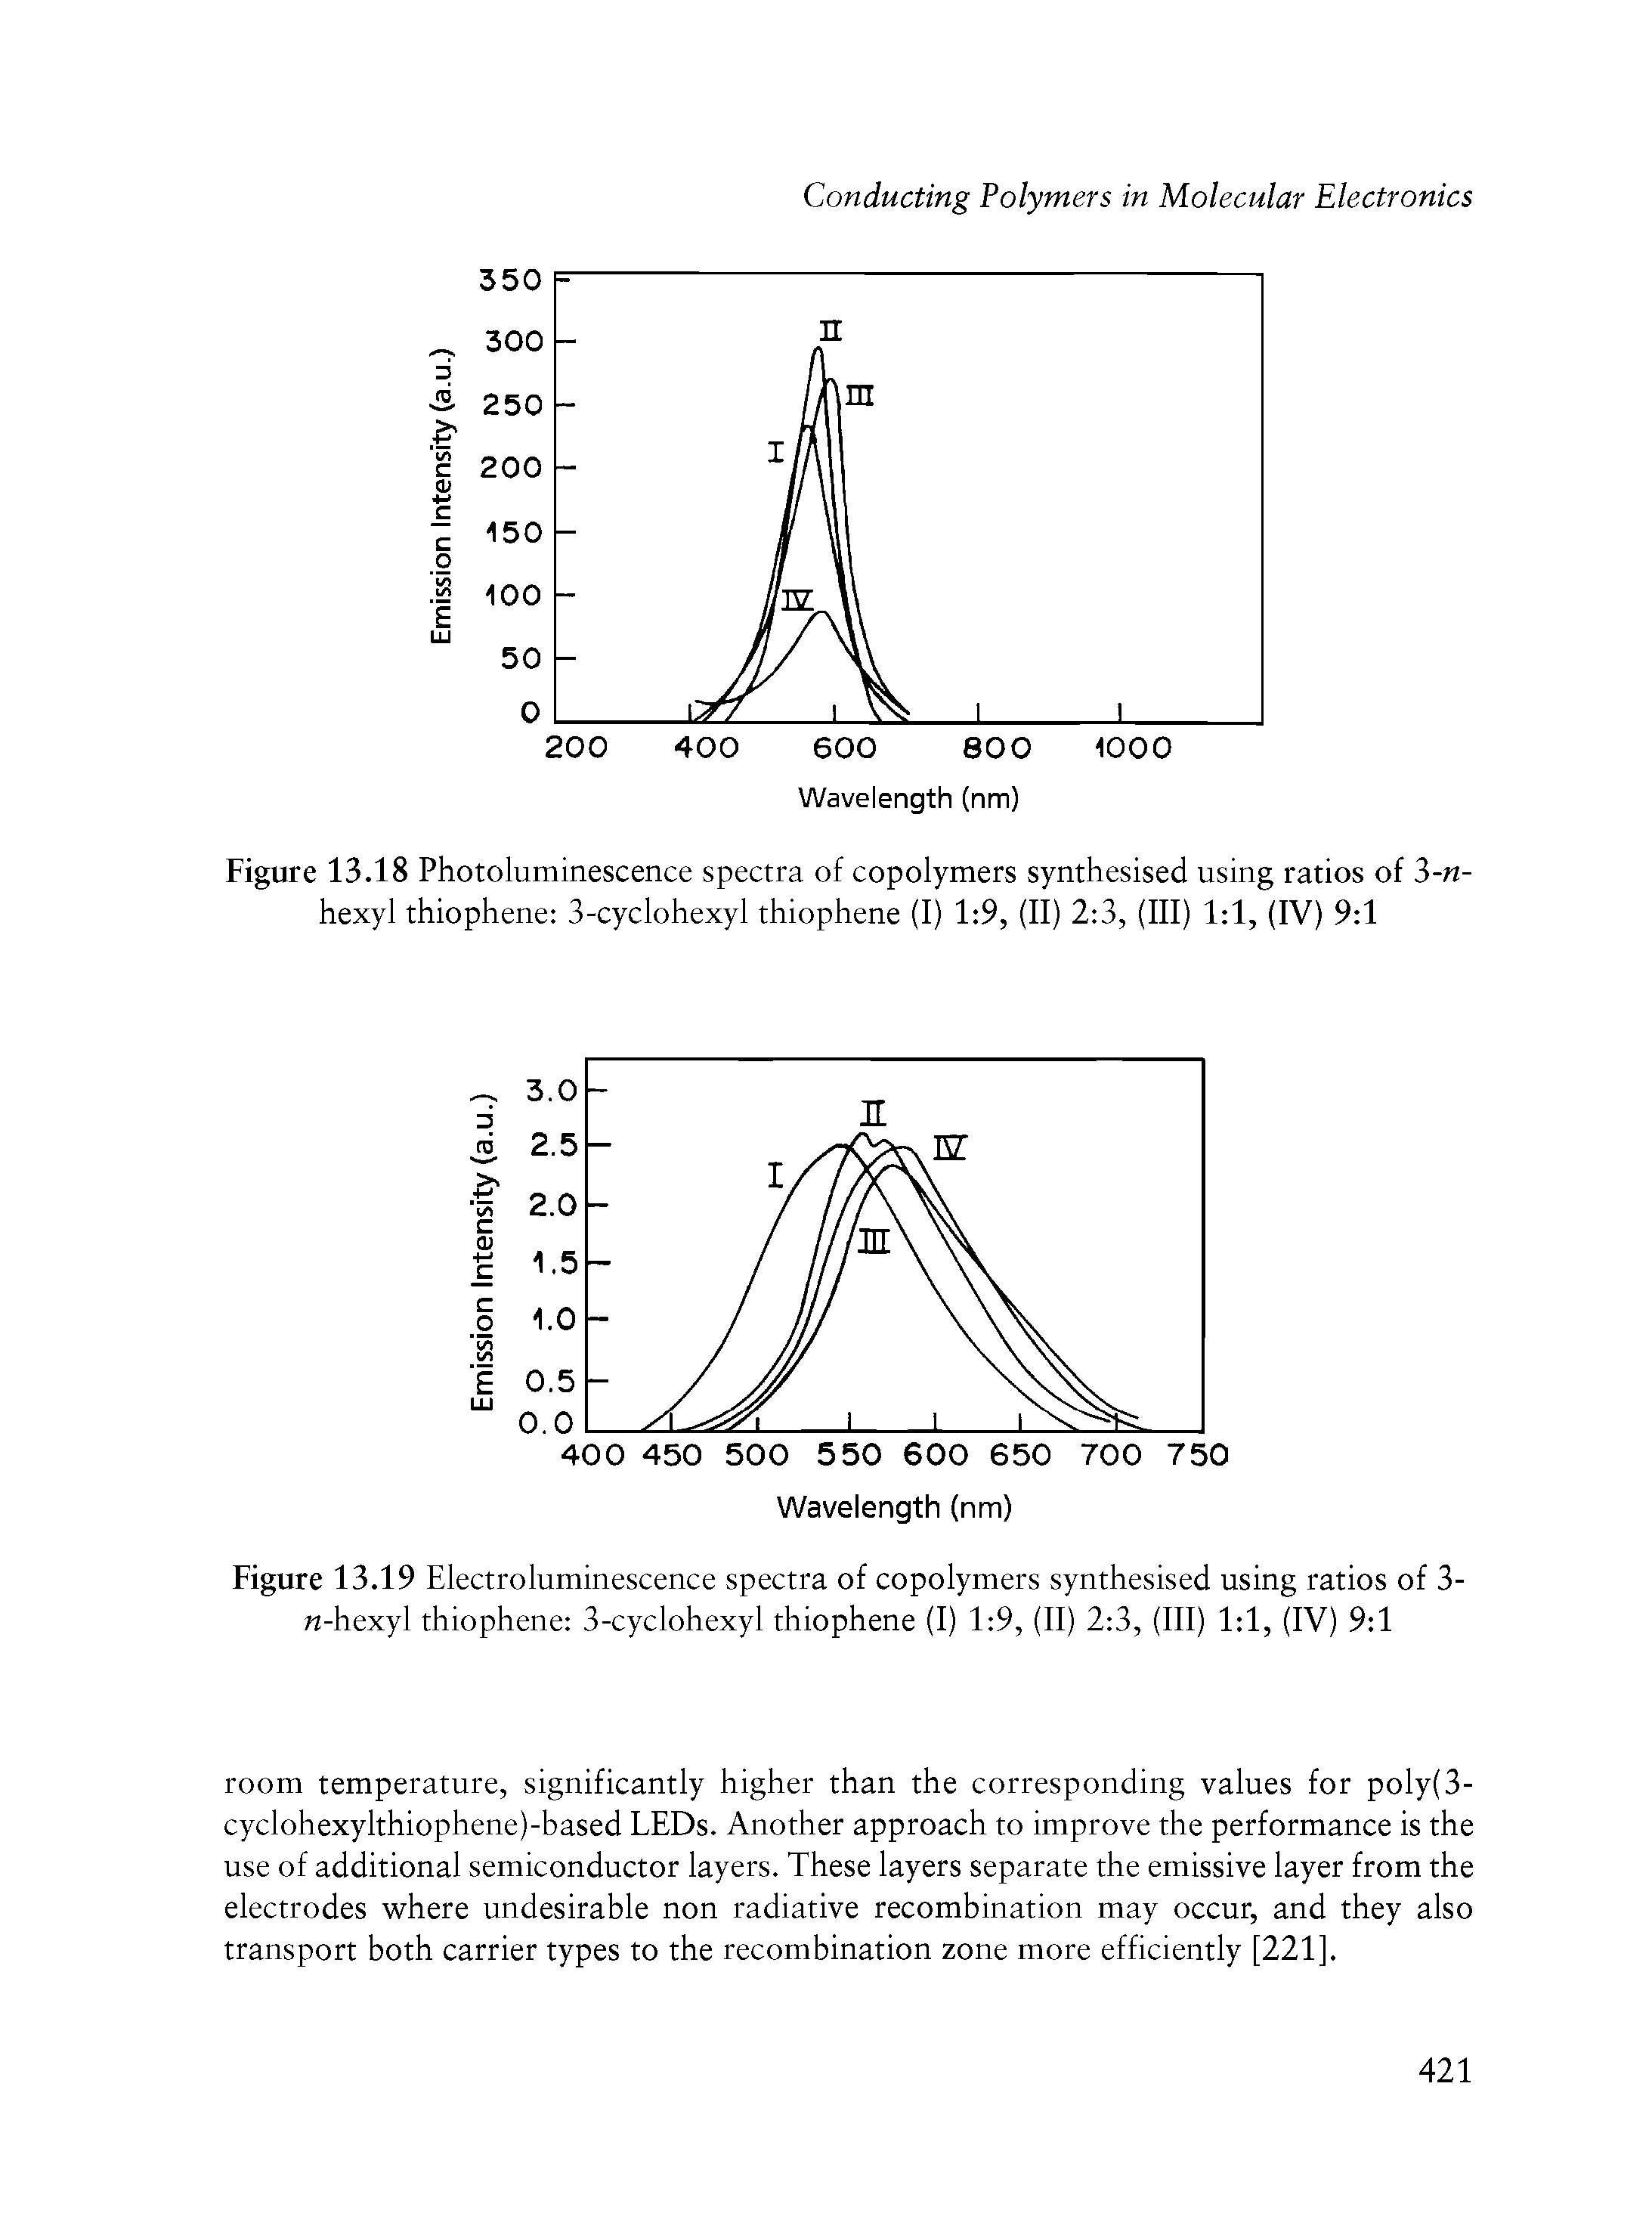 Figure 13.18 Photoluminescence spectra of copolymers synthesised using ratios of 3-n-hexyl thiophene 3-cyclohexyl thiophene (I) 1 9, (II) 2 3, (III) 1 1, (IV) 9 1...